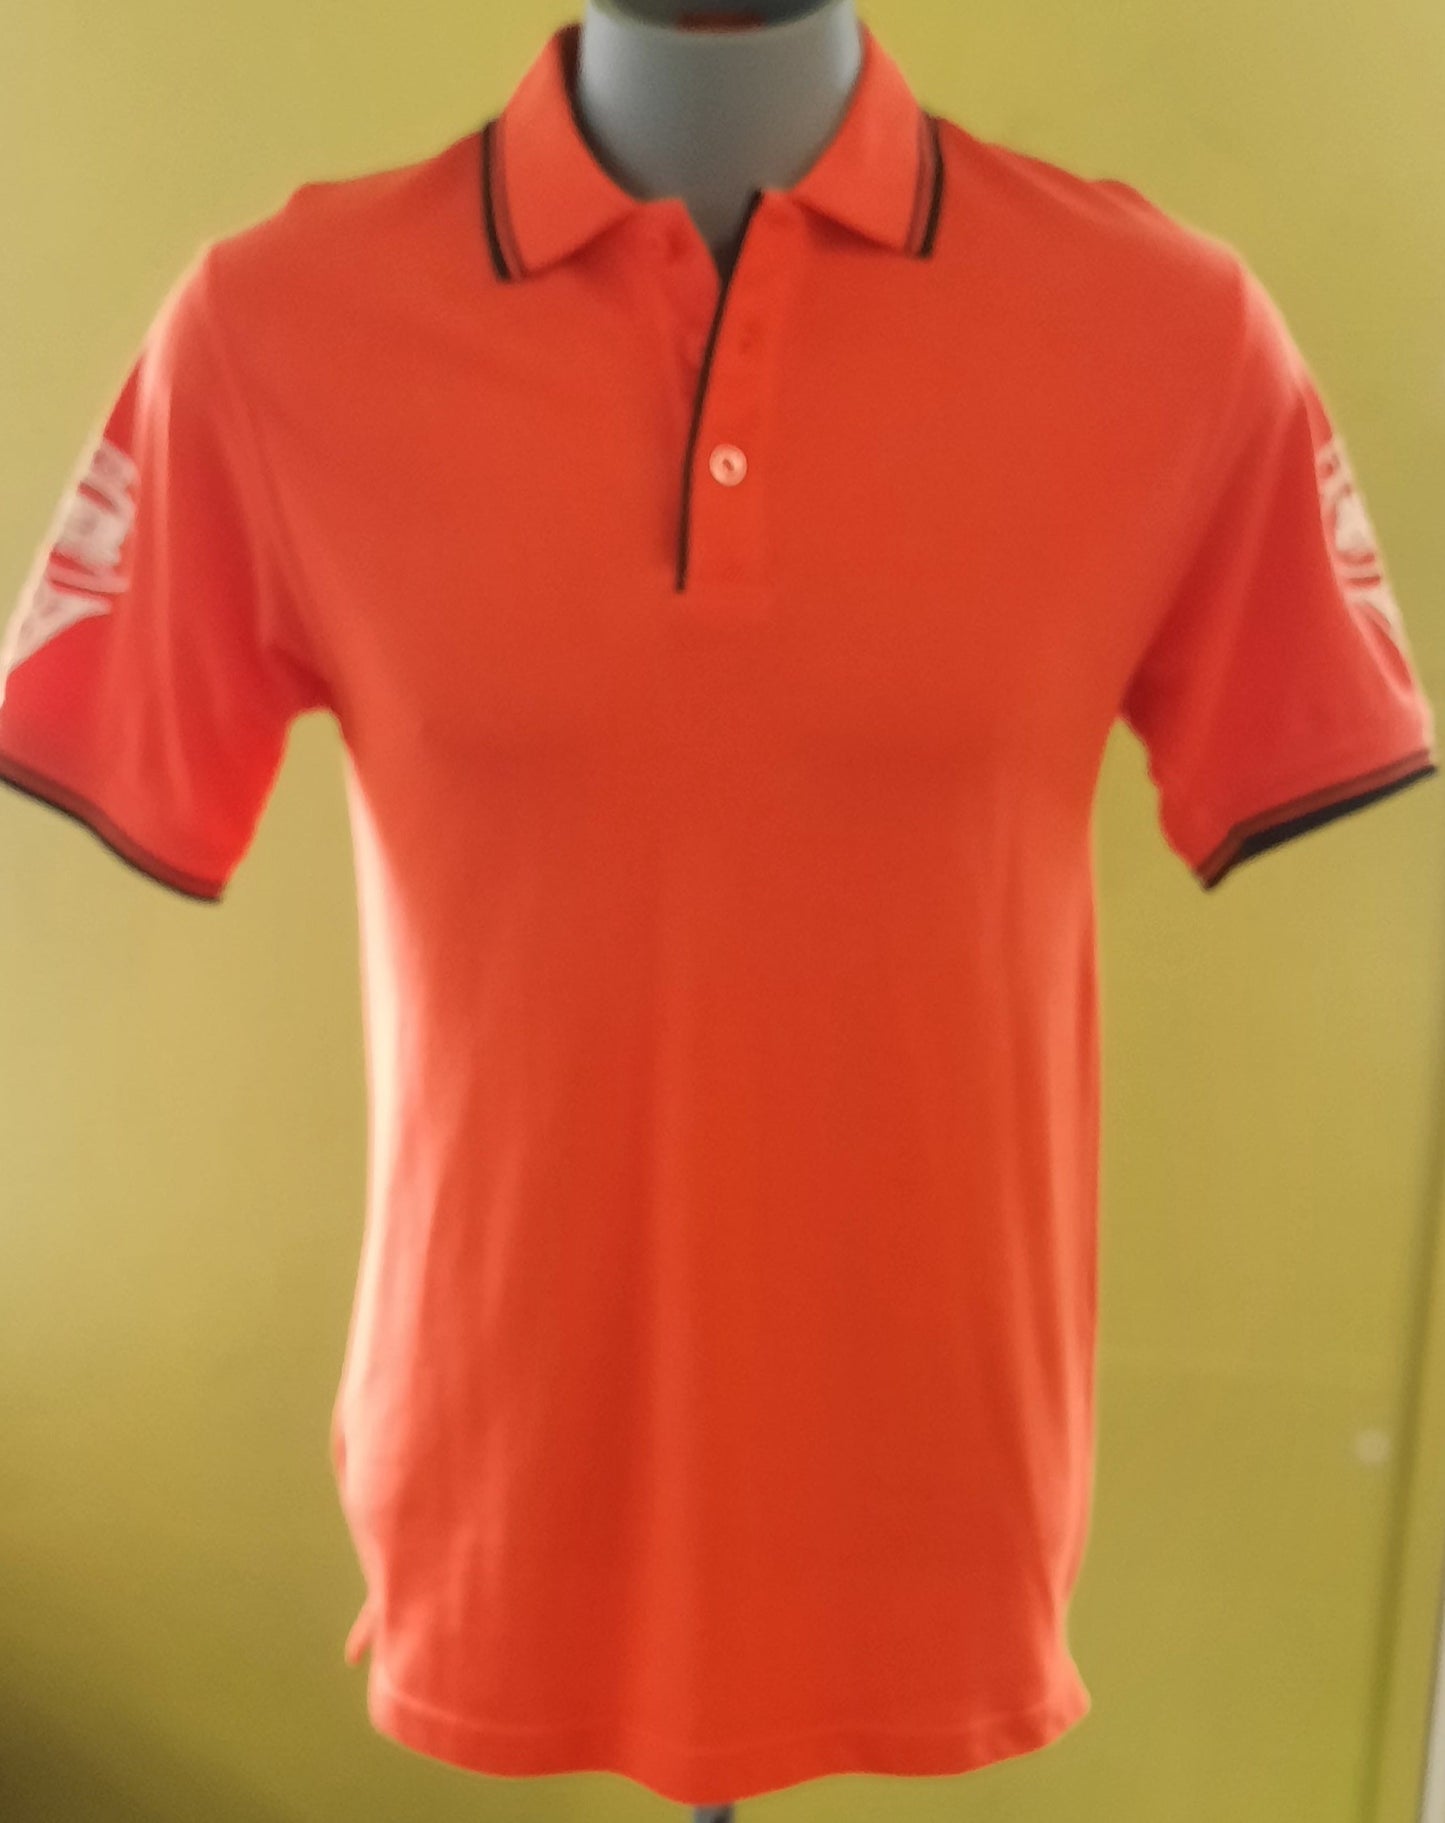 Studebaker Polo Shirt - Orange